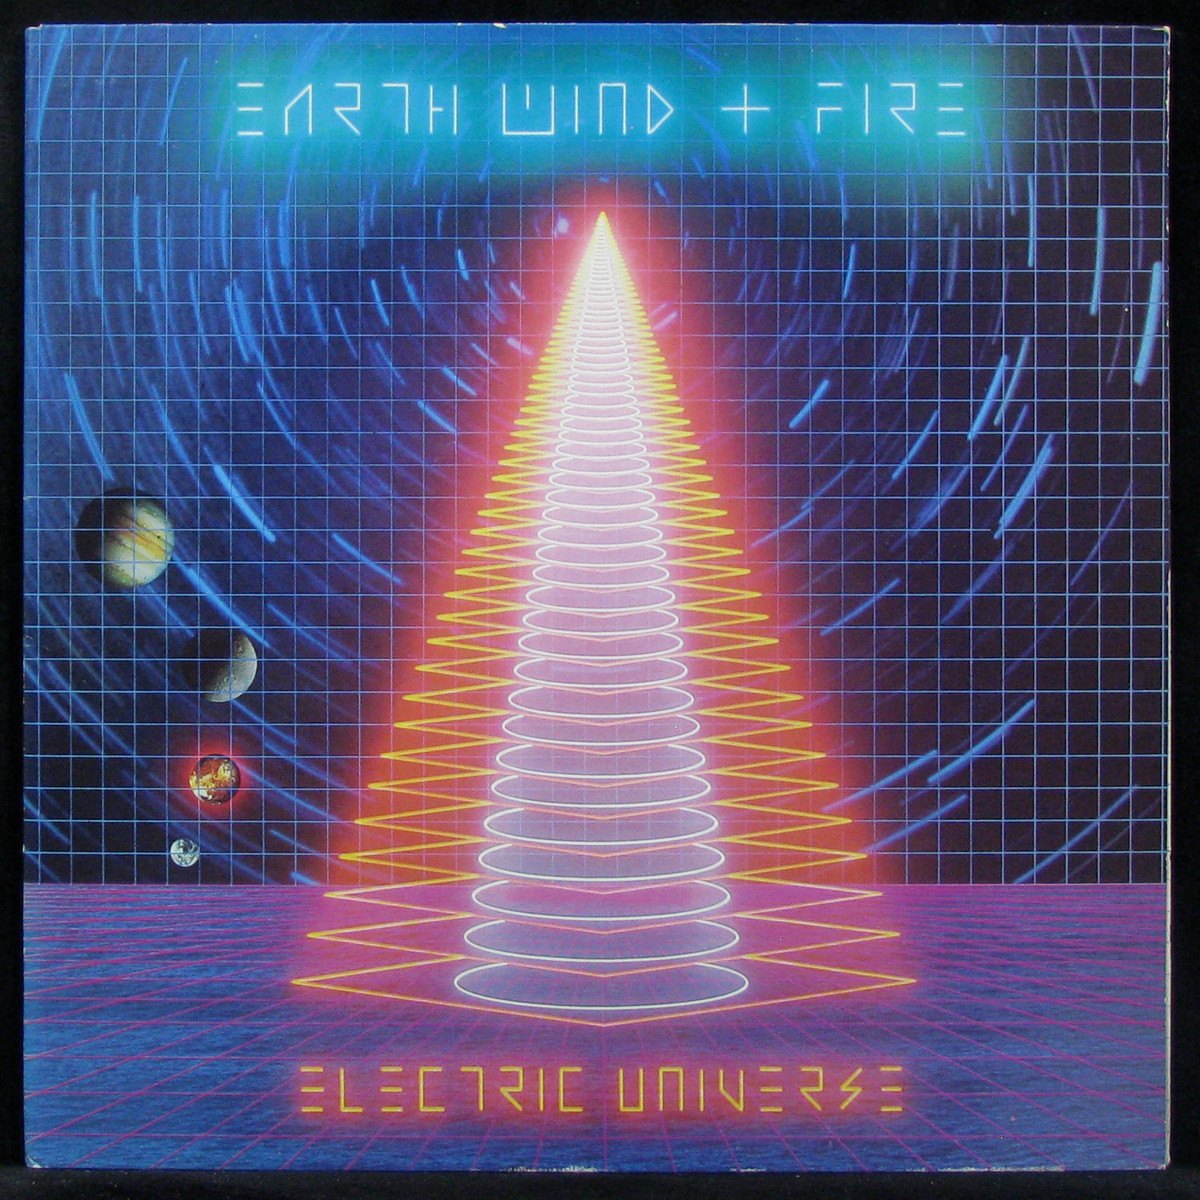 LP Earth, Wind & Fire — Electric Universe фото